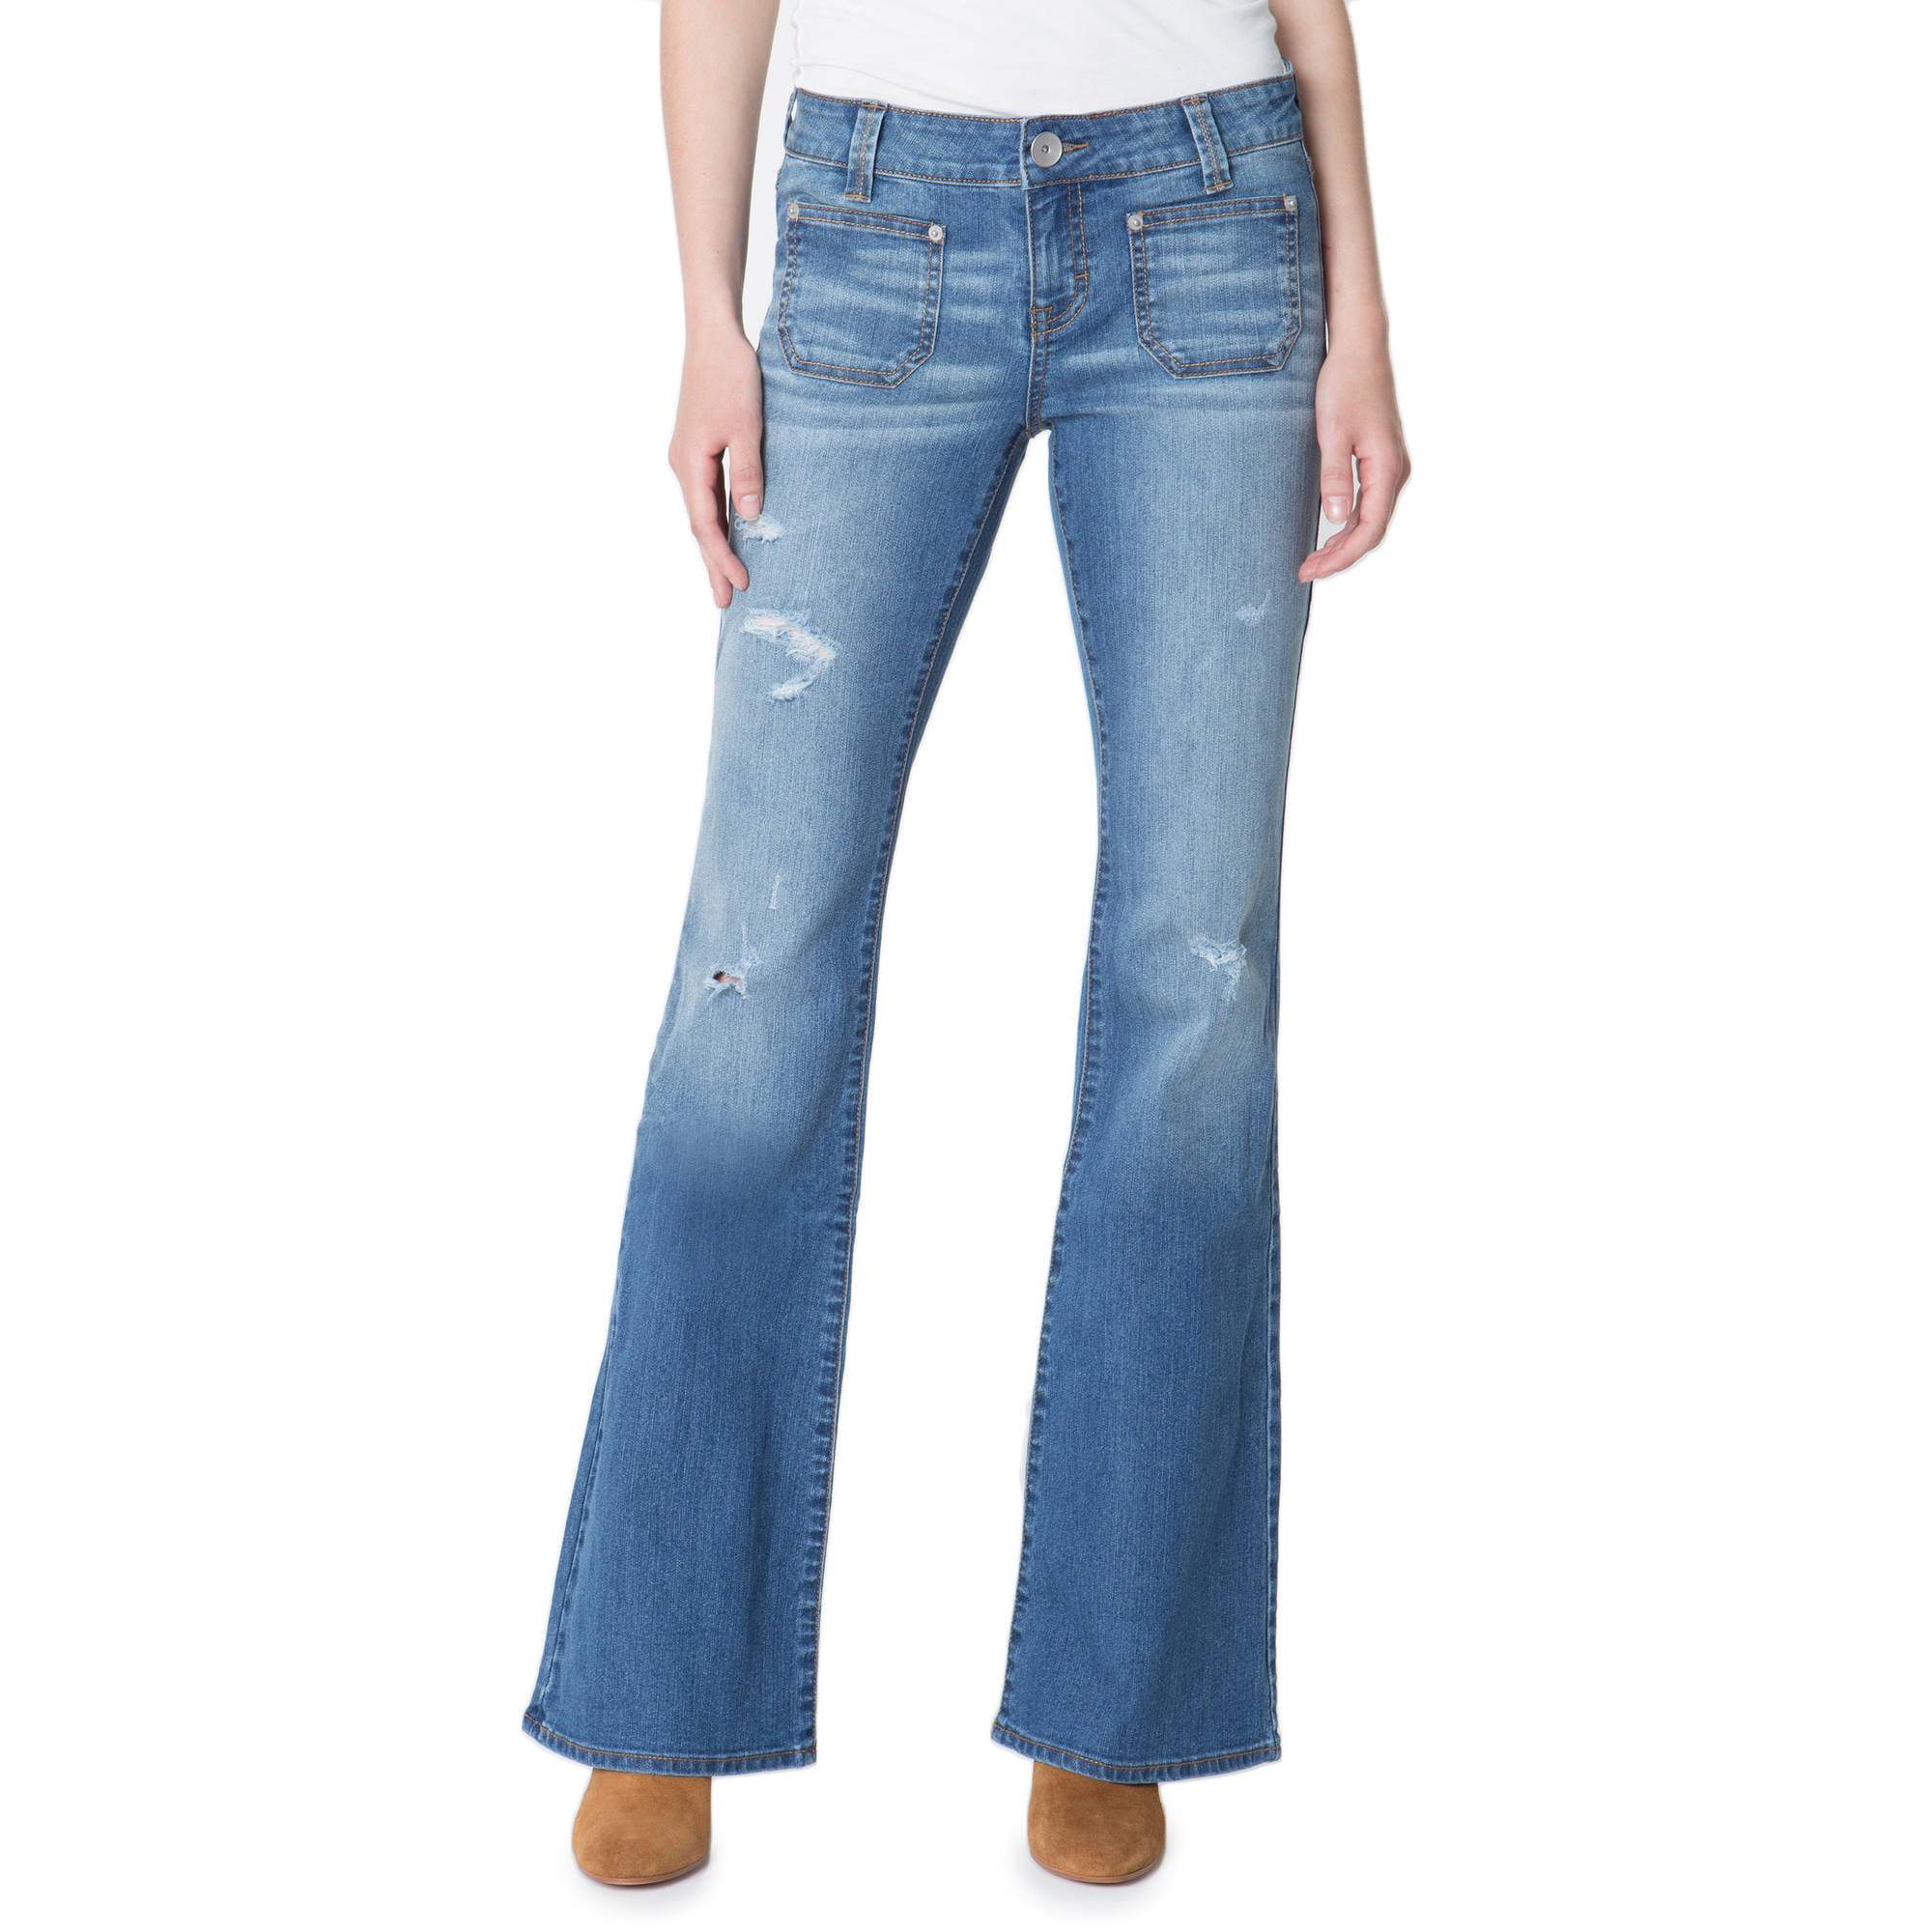 G21 - Juniors' Flared Jeans with Patch Pockets - Walmart.com - Walmart.com